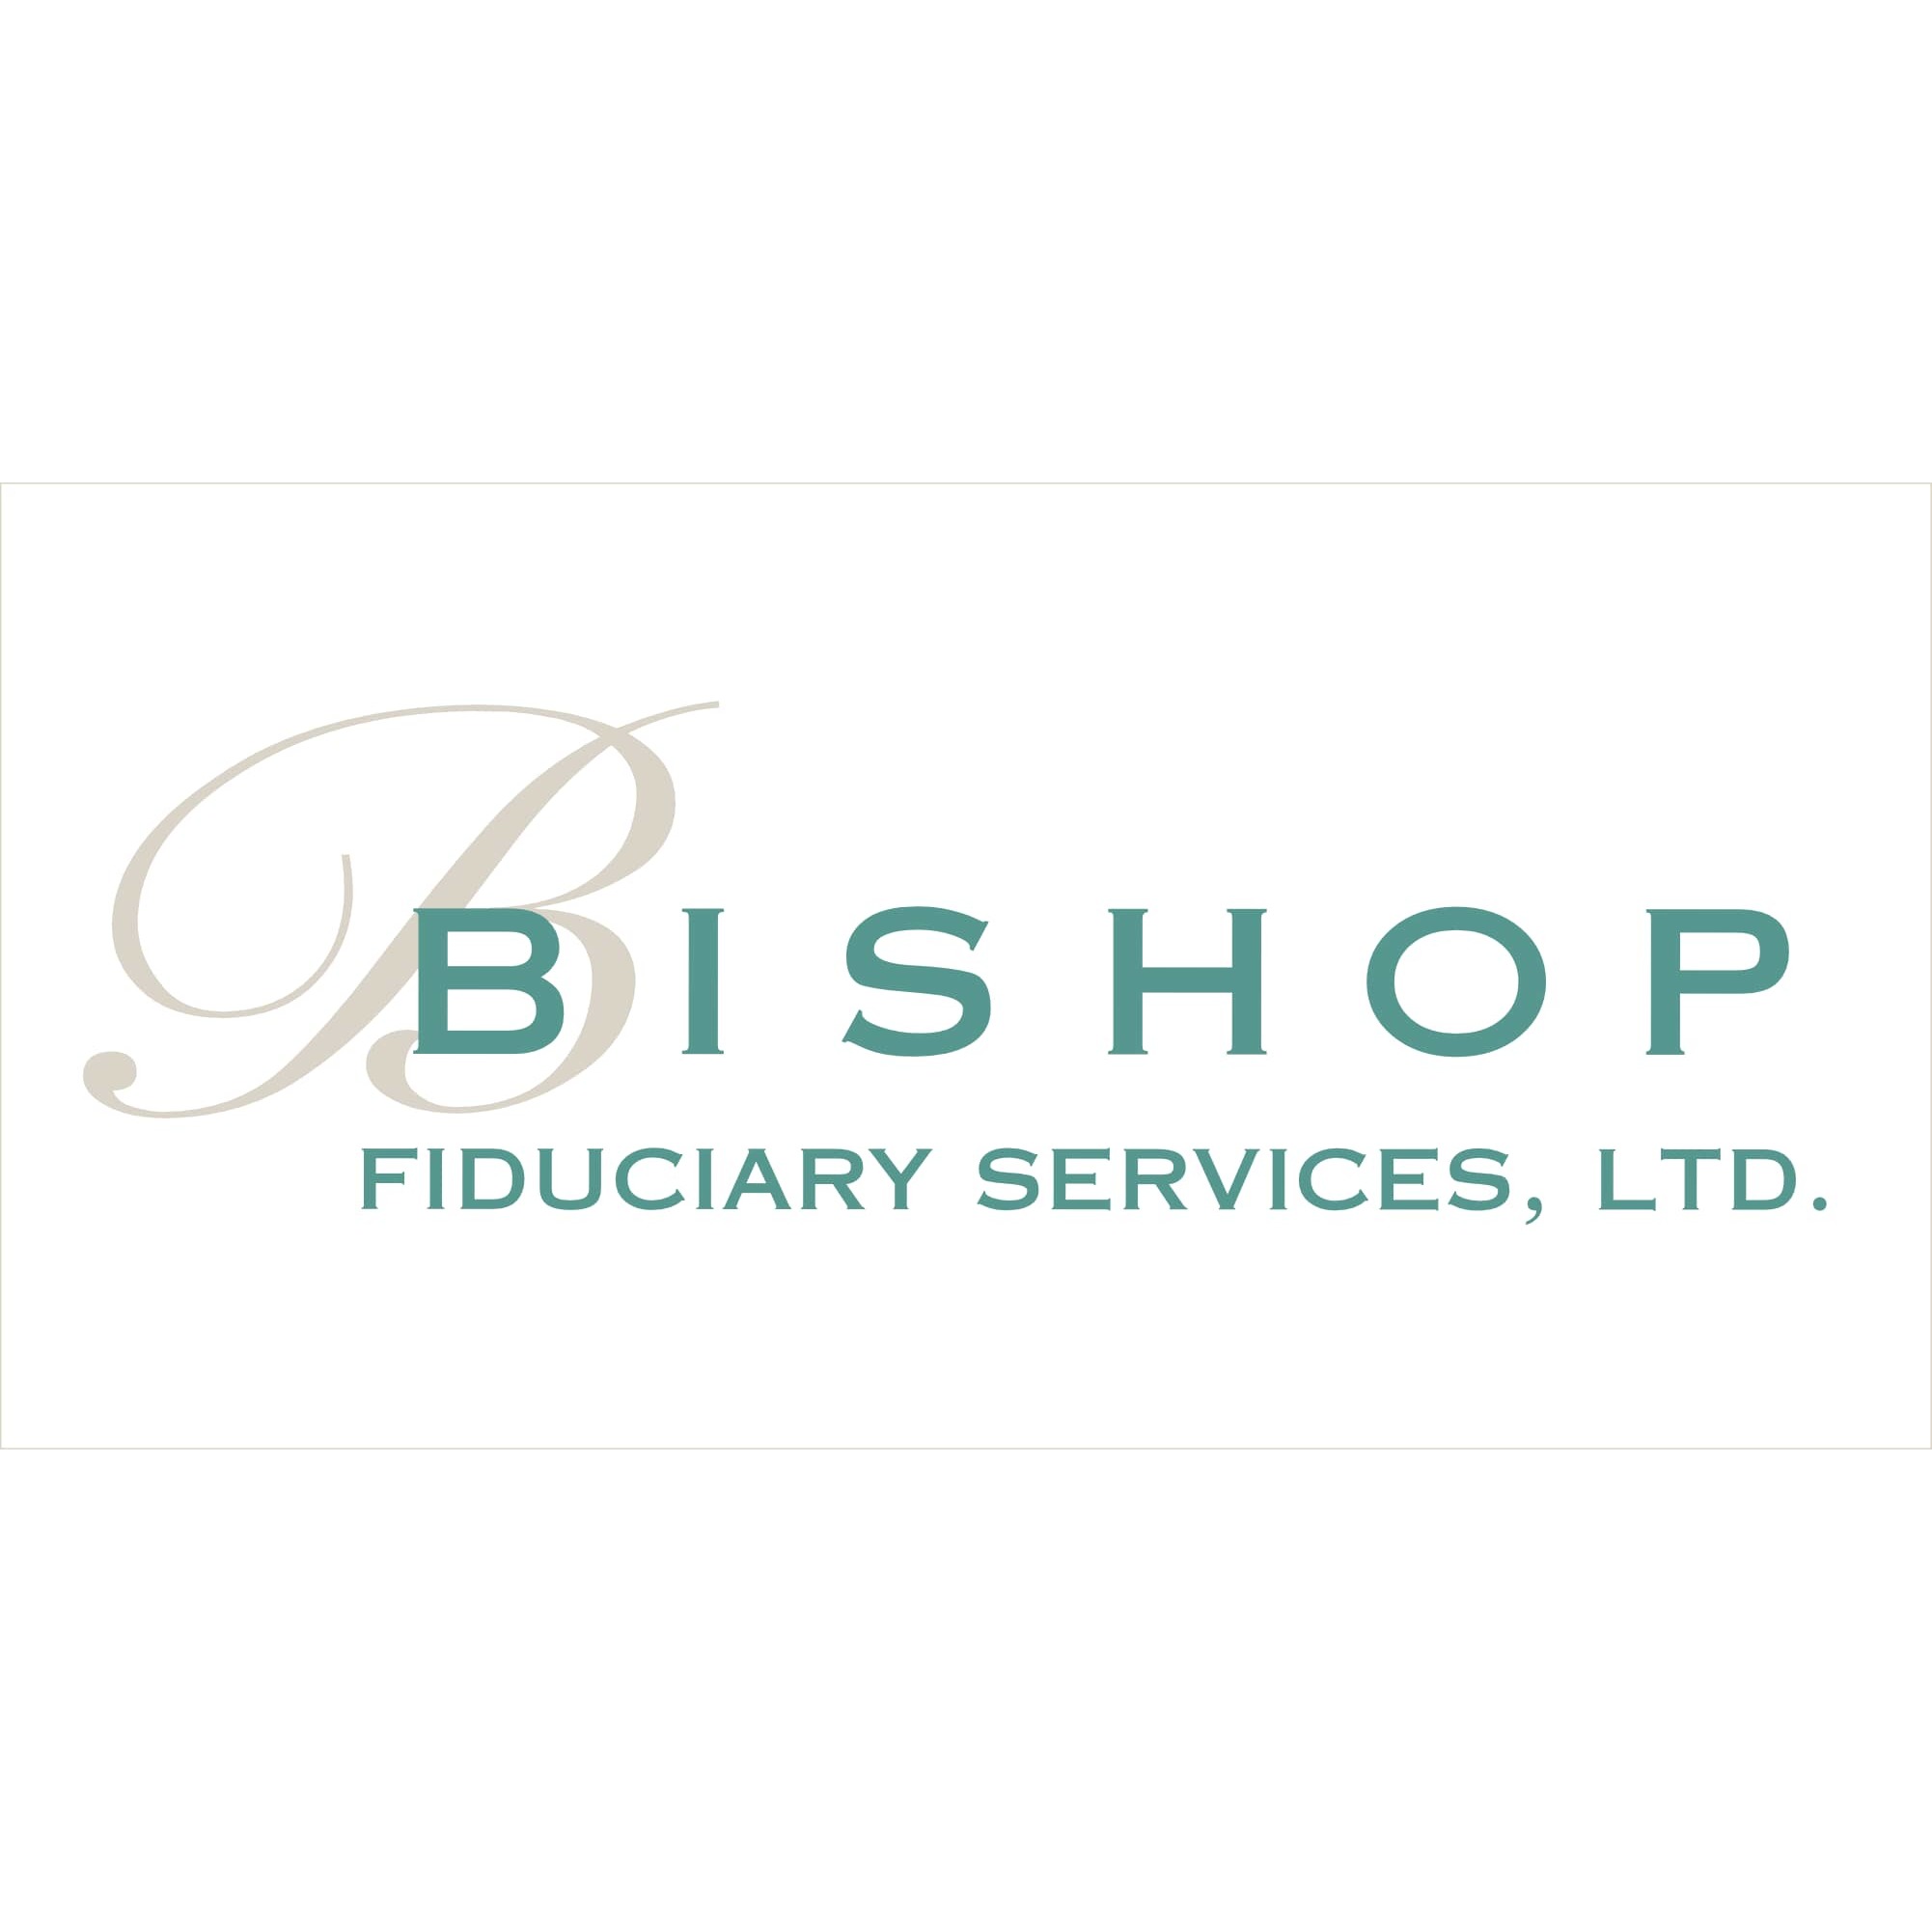 Bishop Fiduciary Services Ltd. Logo